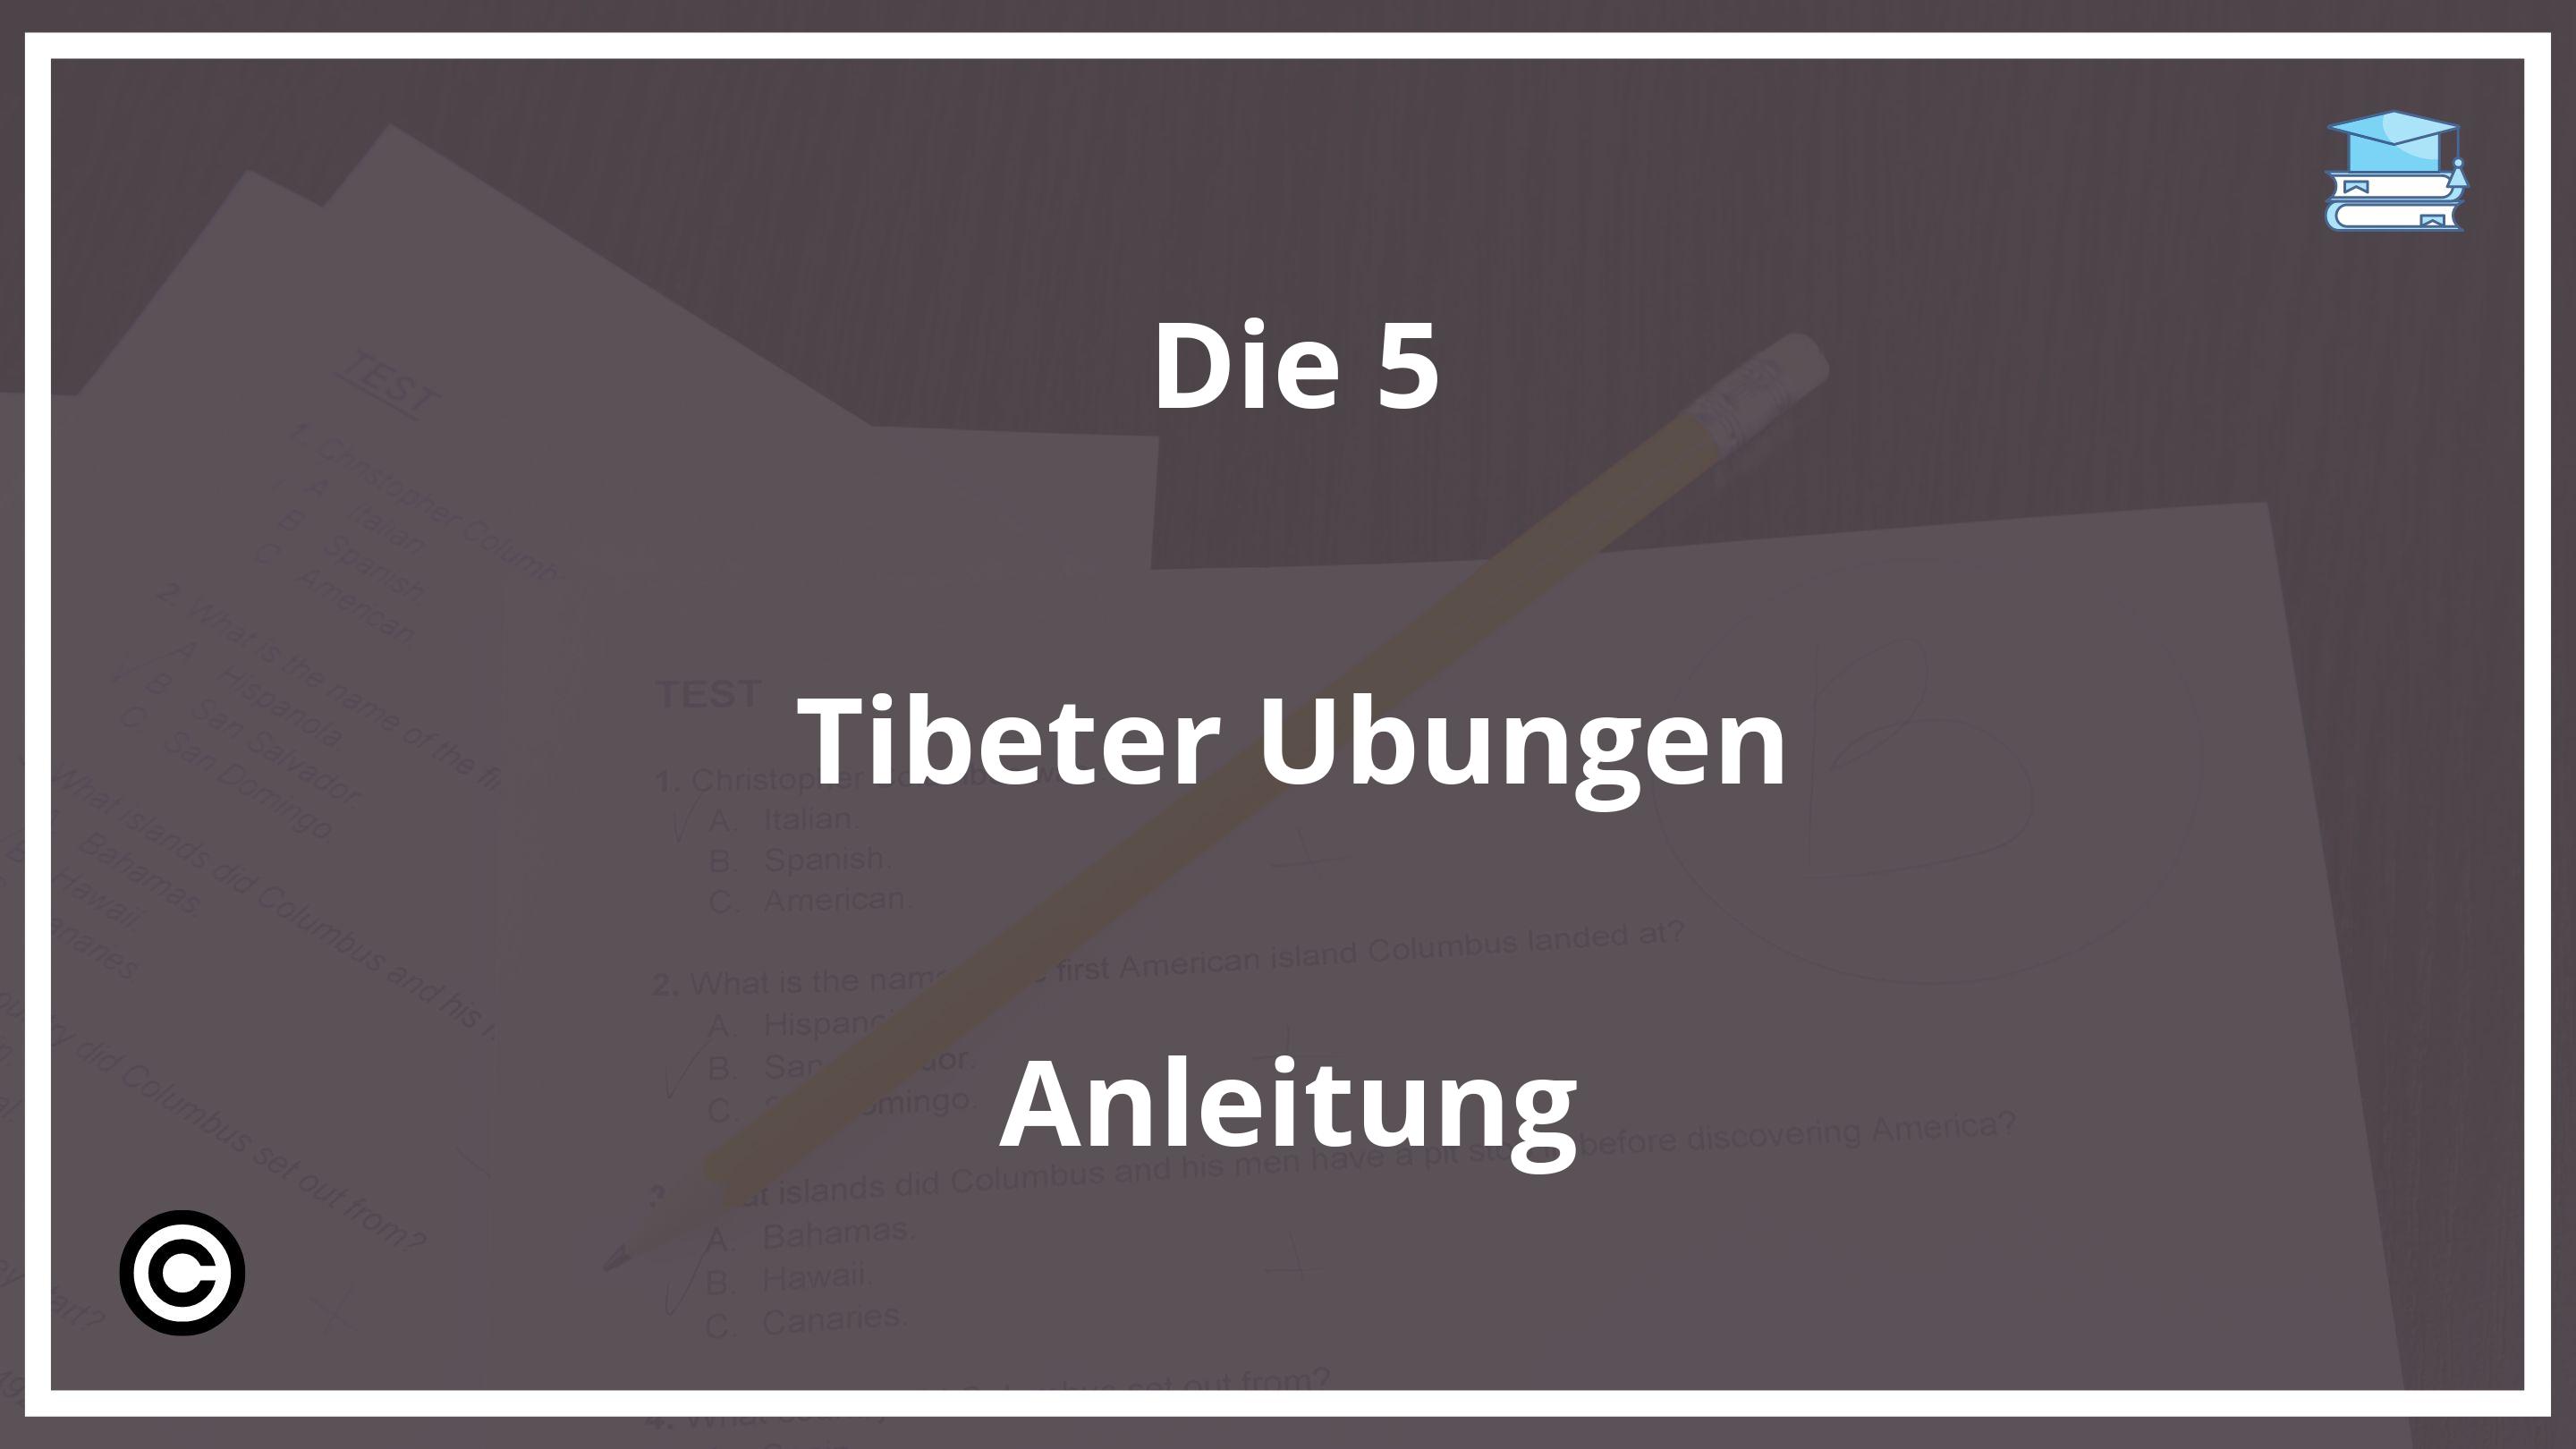 Die 5 Tibeter Übungen Anleitung PDF